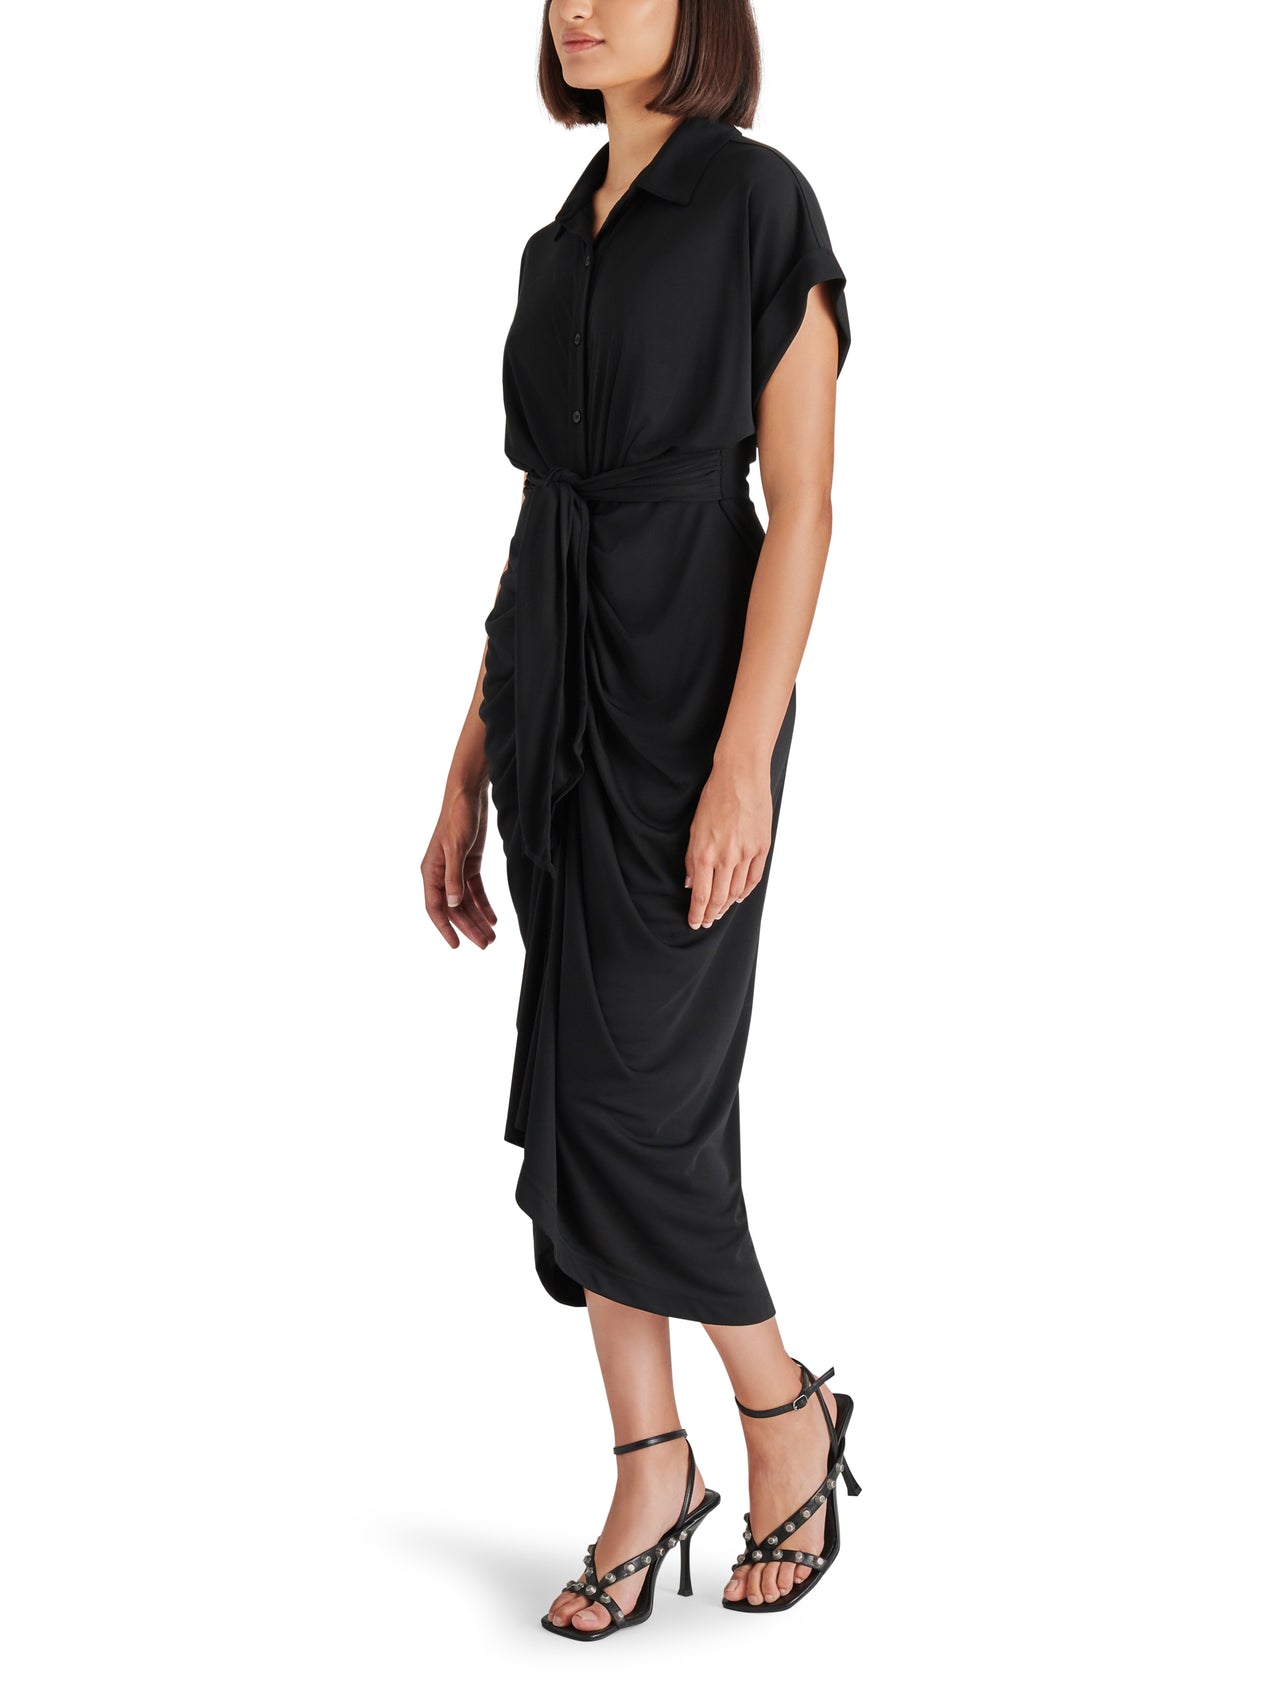 Tori Knit Short Sleeve Black Dress, Maxi Dress by Steve Madden | LIT Boutique